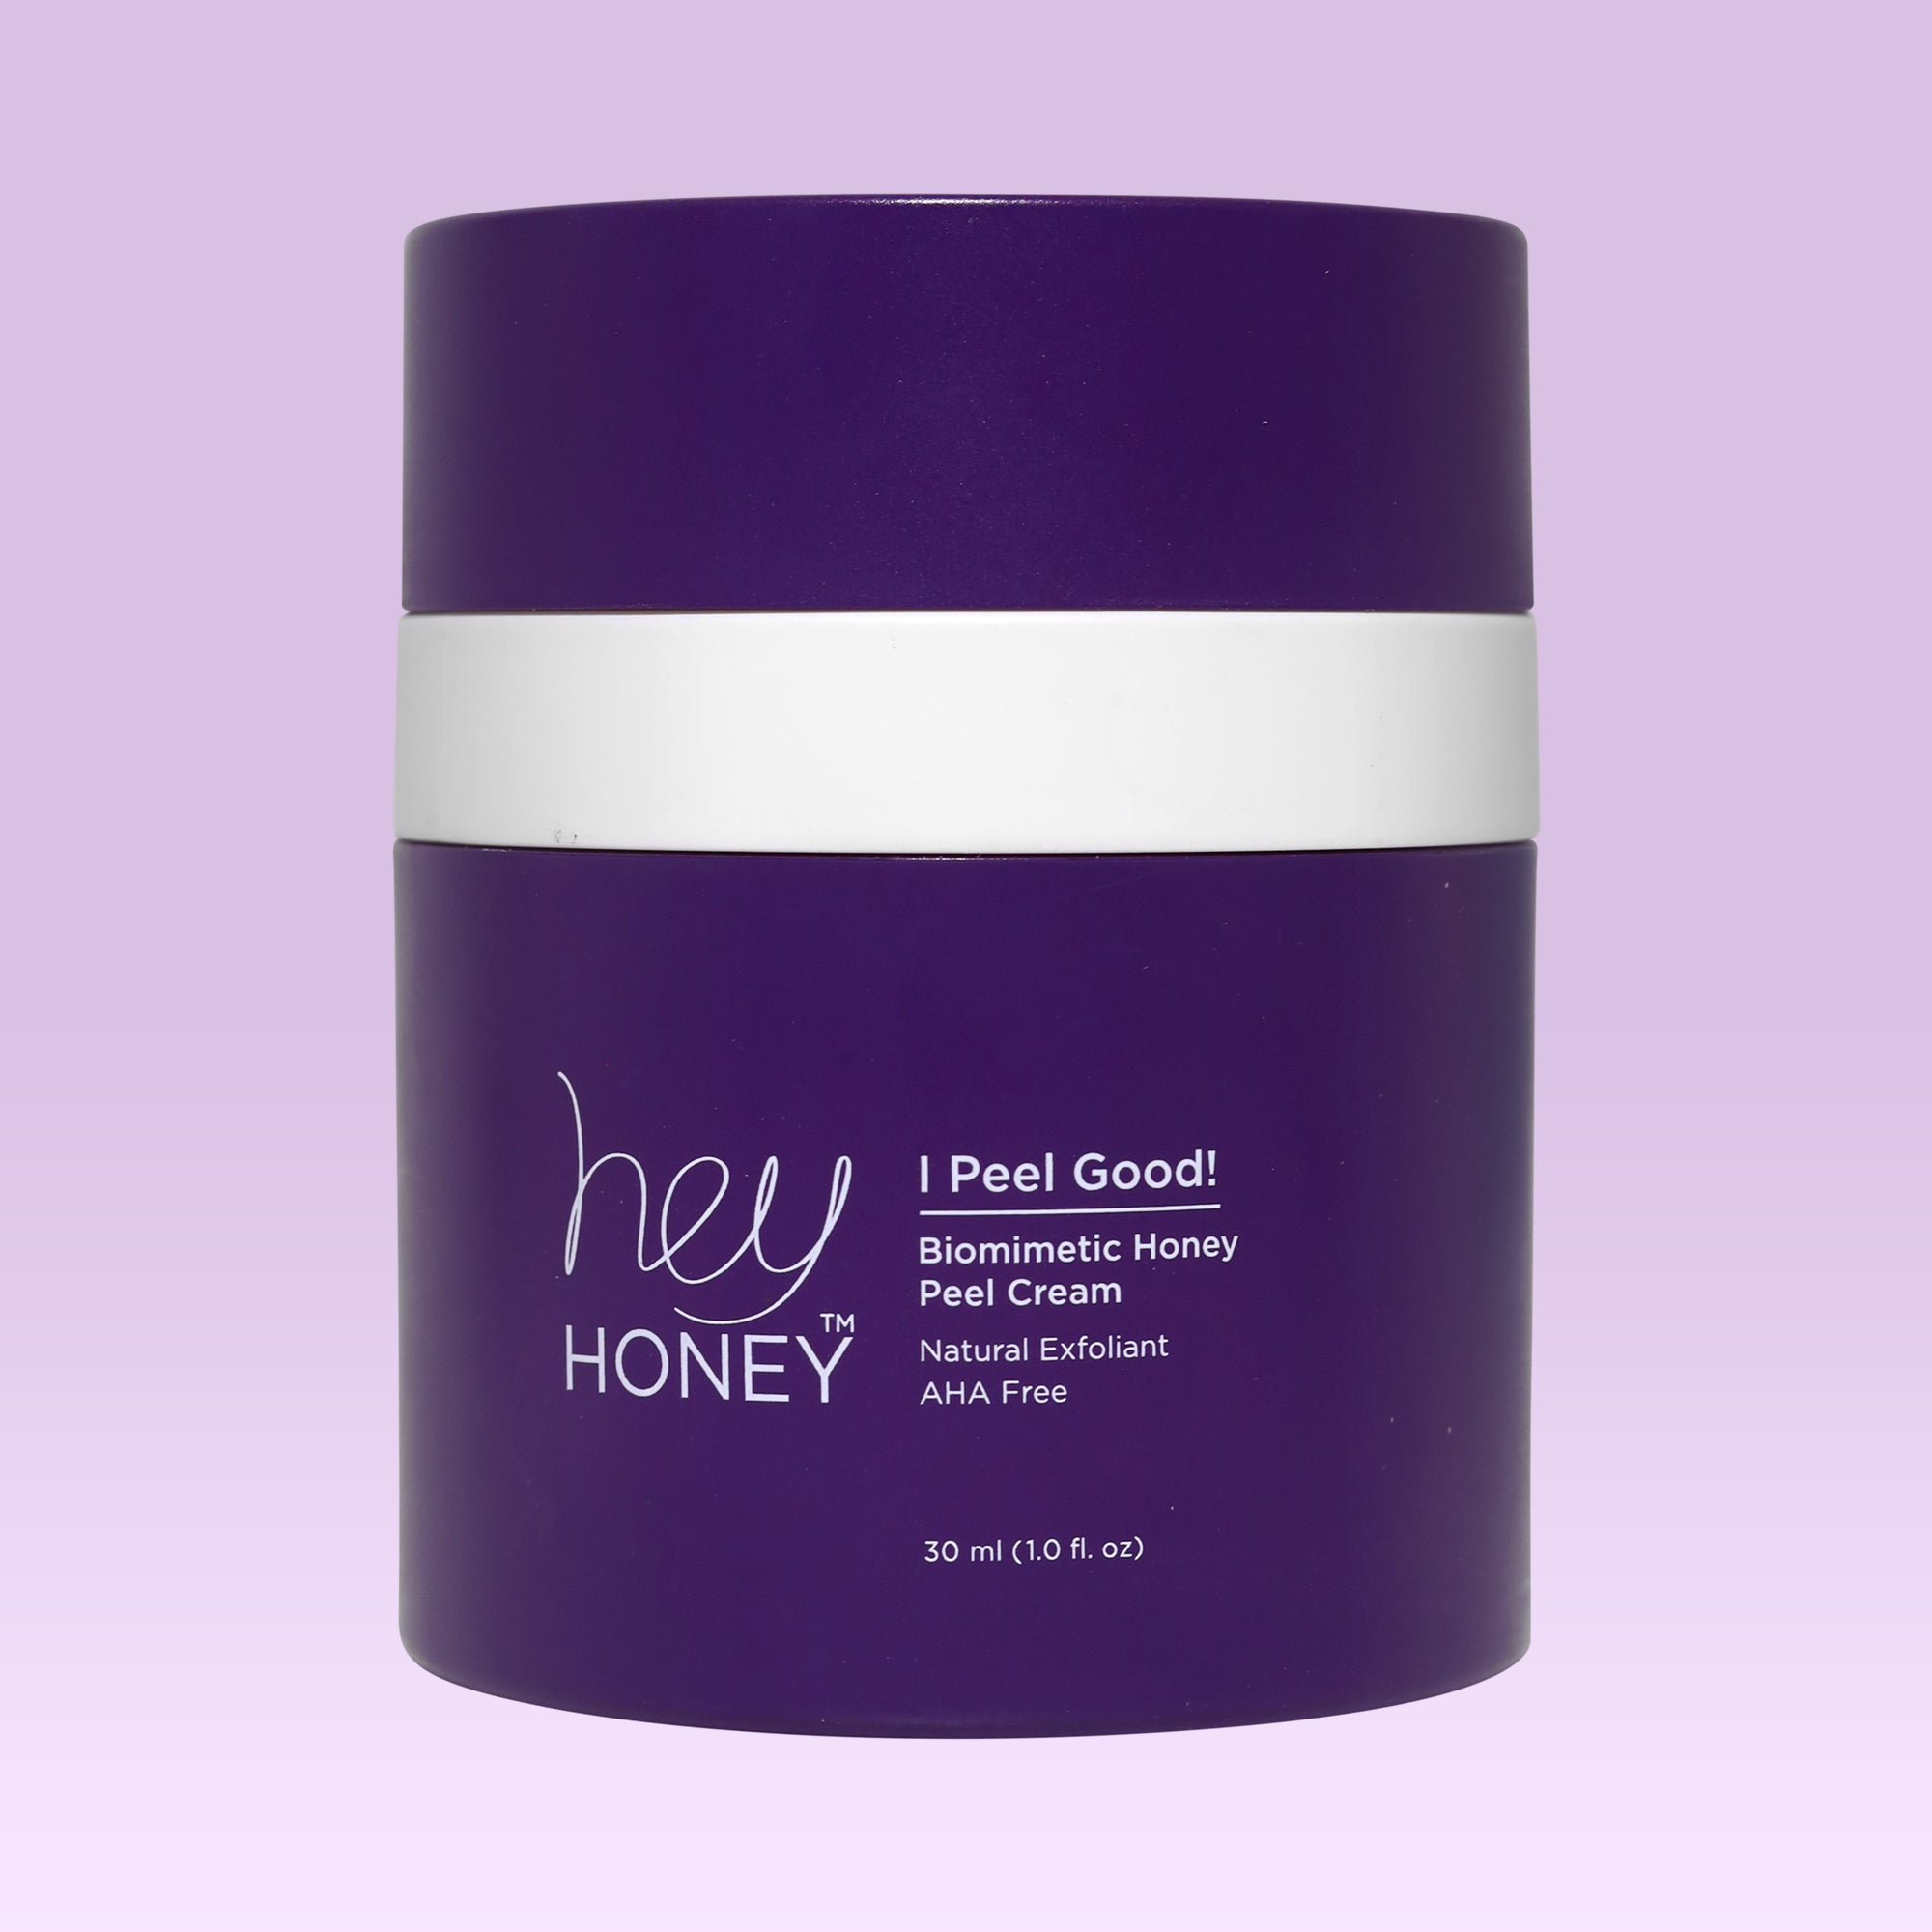 I PEEL GOOD! - Biomimetic Honey Peel Cream